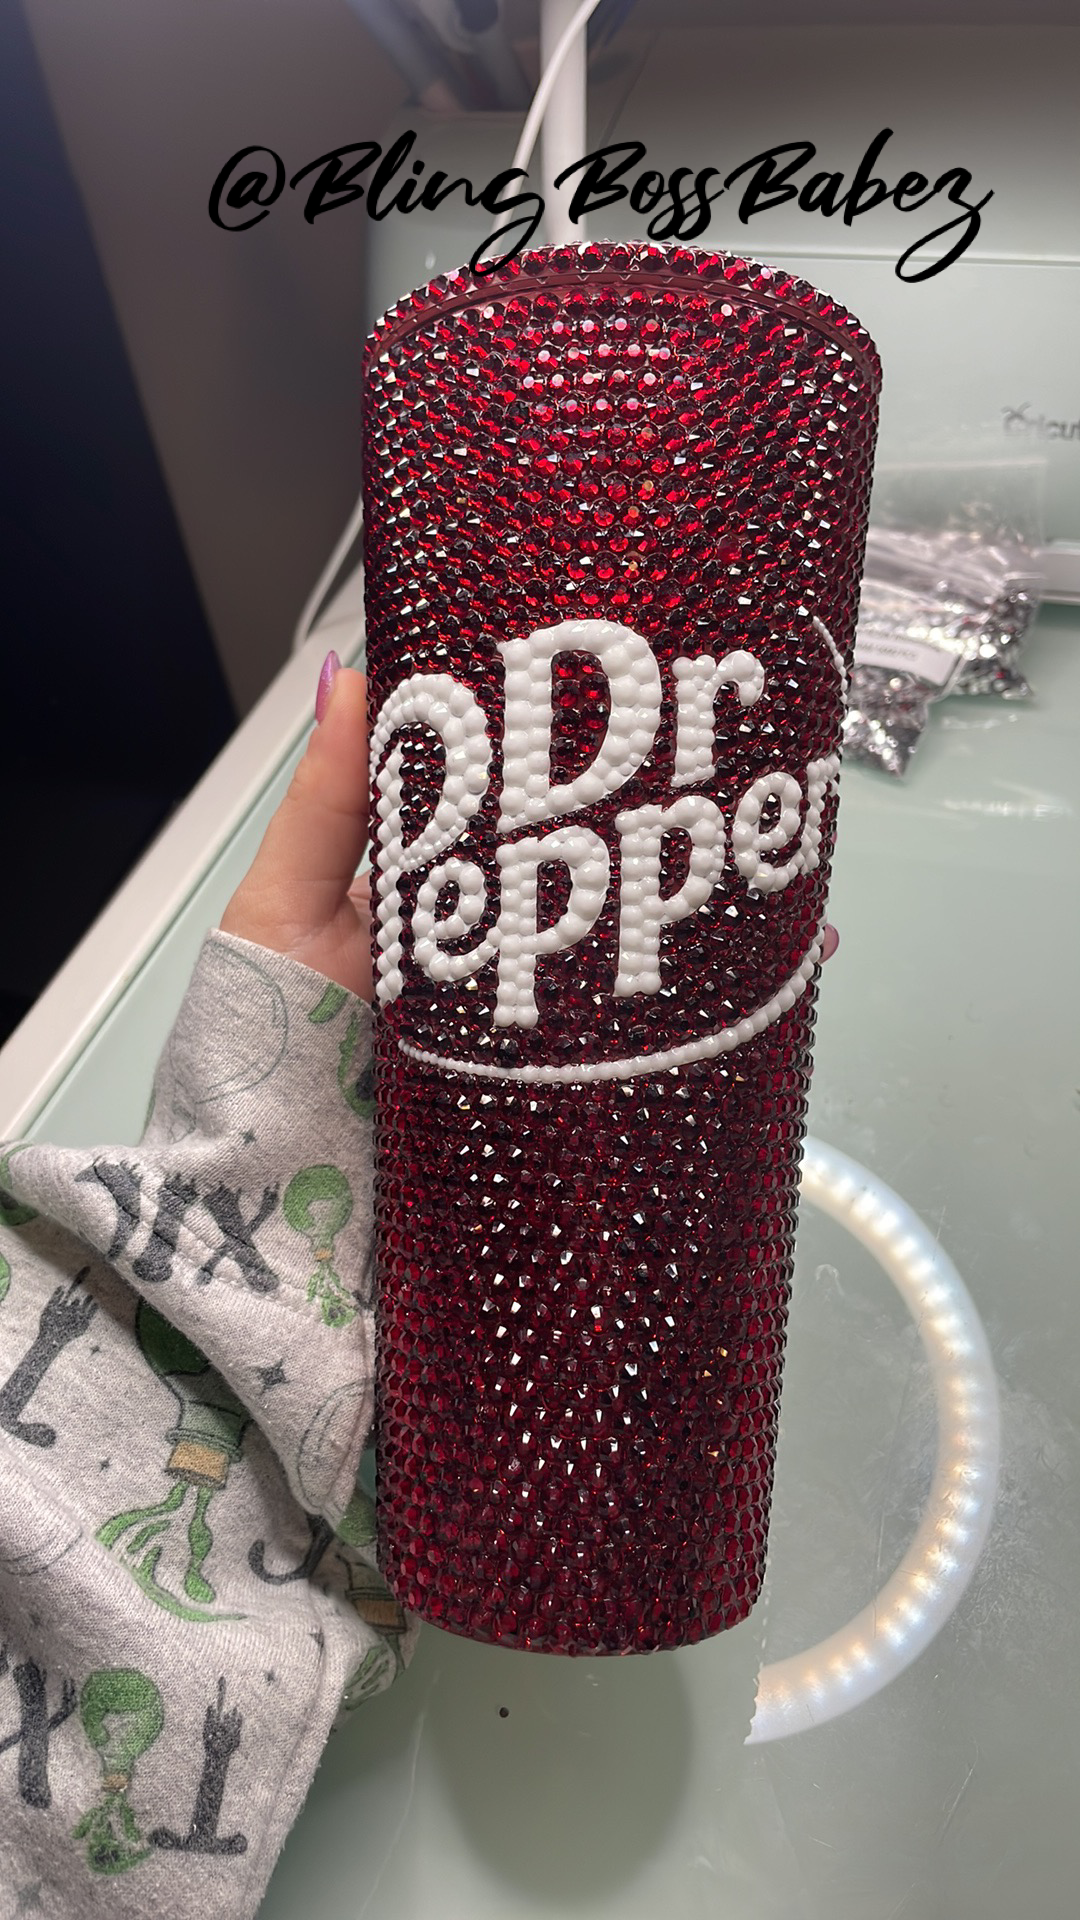 Dr. Pepper Tumbler, Dr. Pepper Cup, Custom Tumbler 